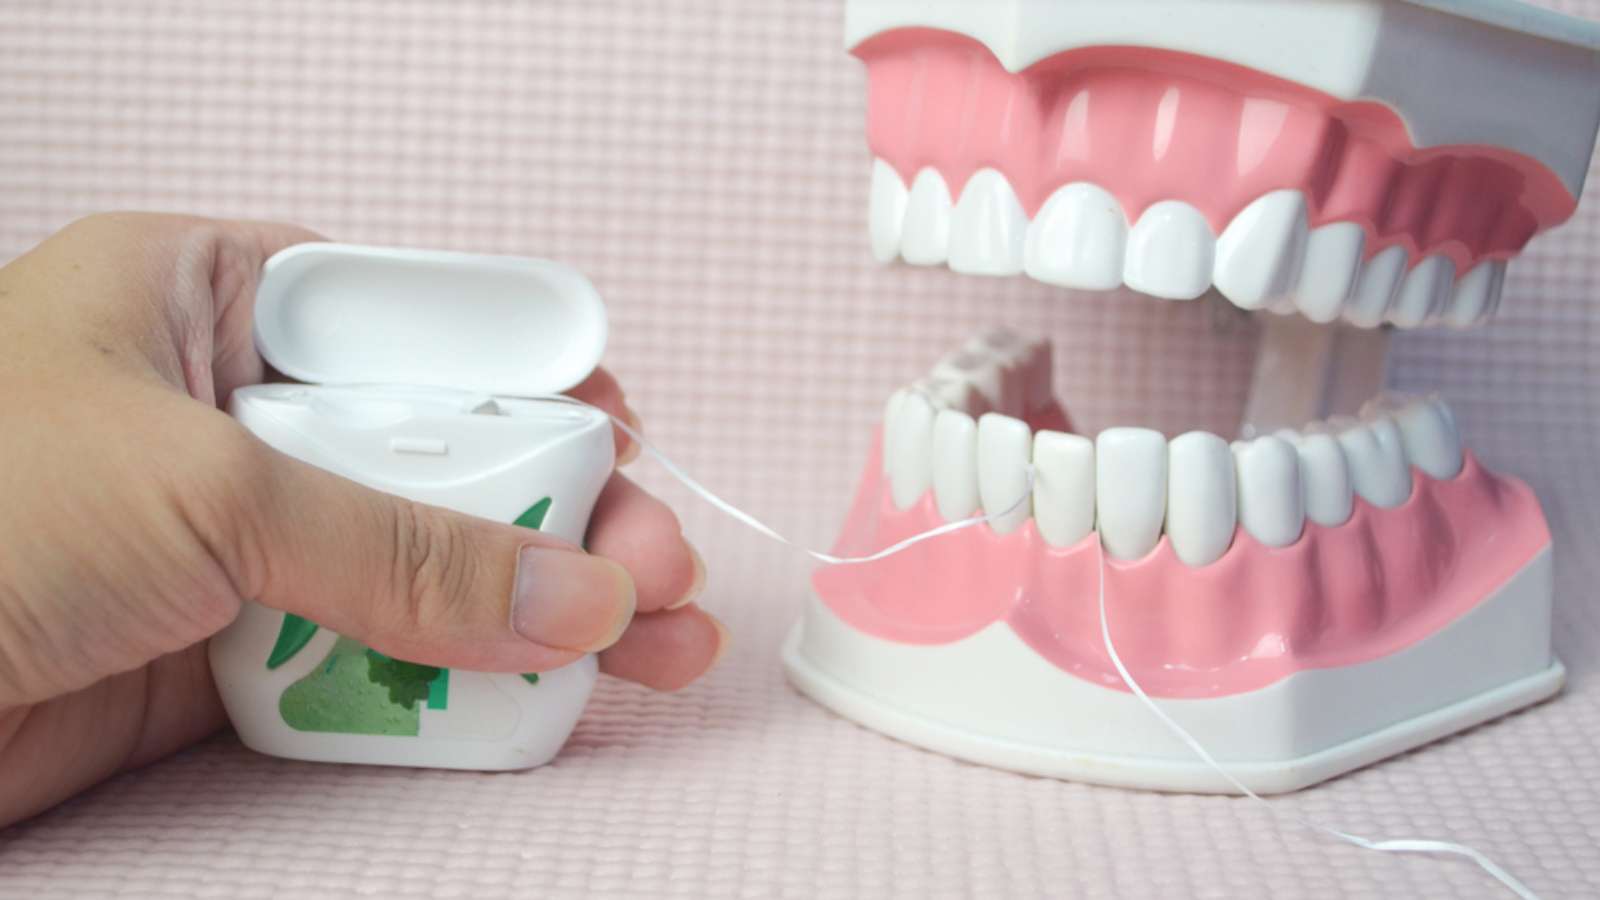 hand holding dental floss to flossing teeth model